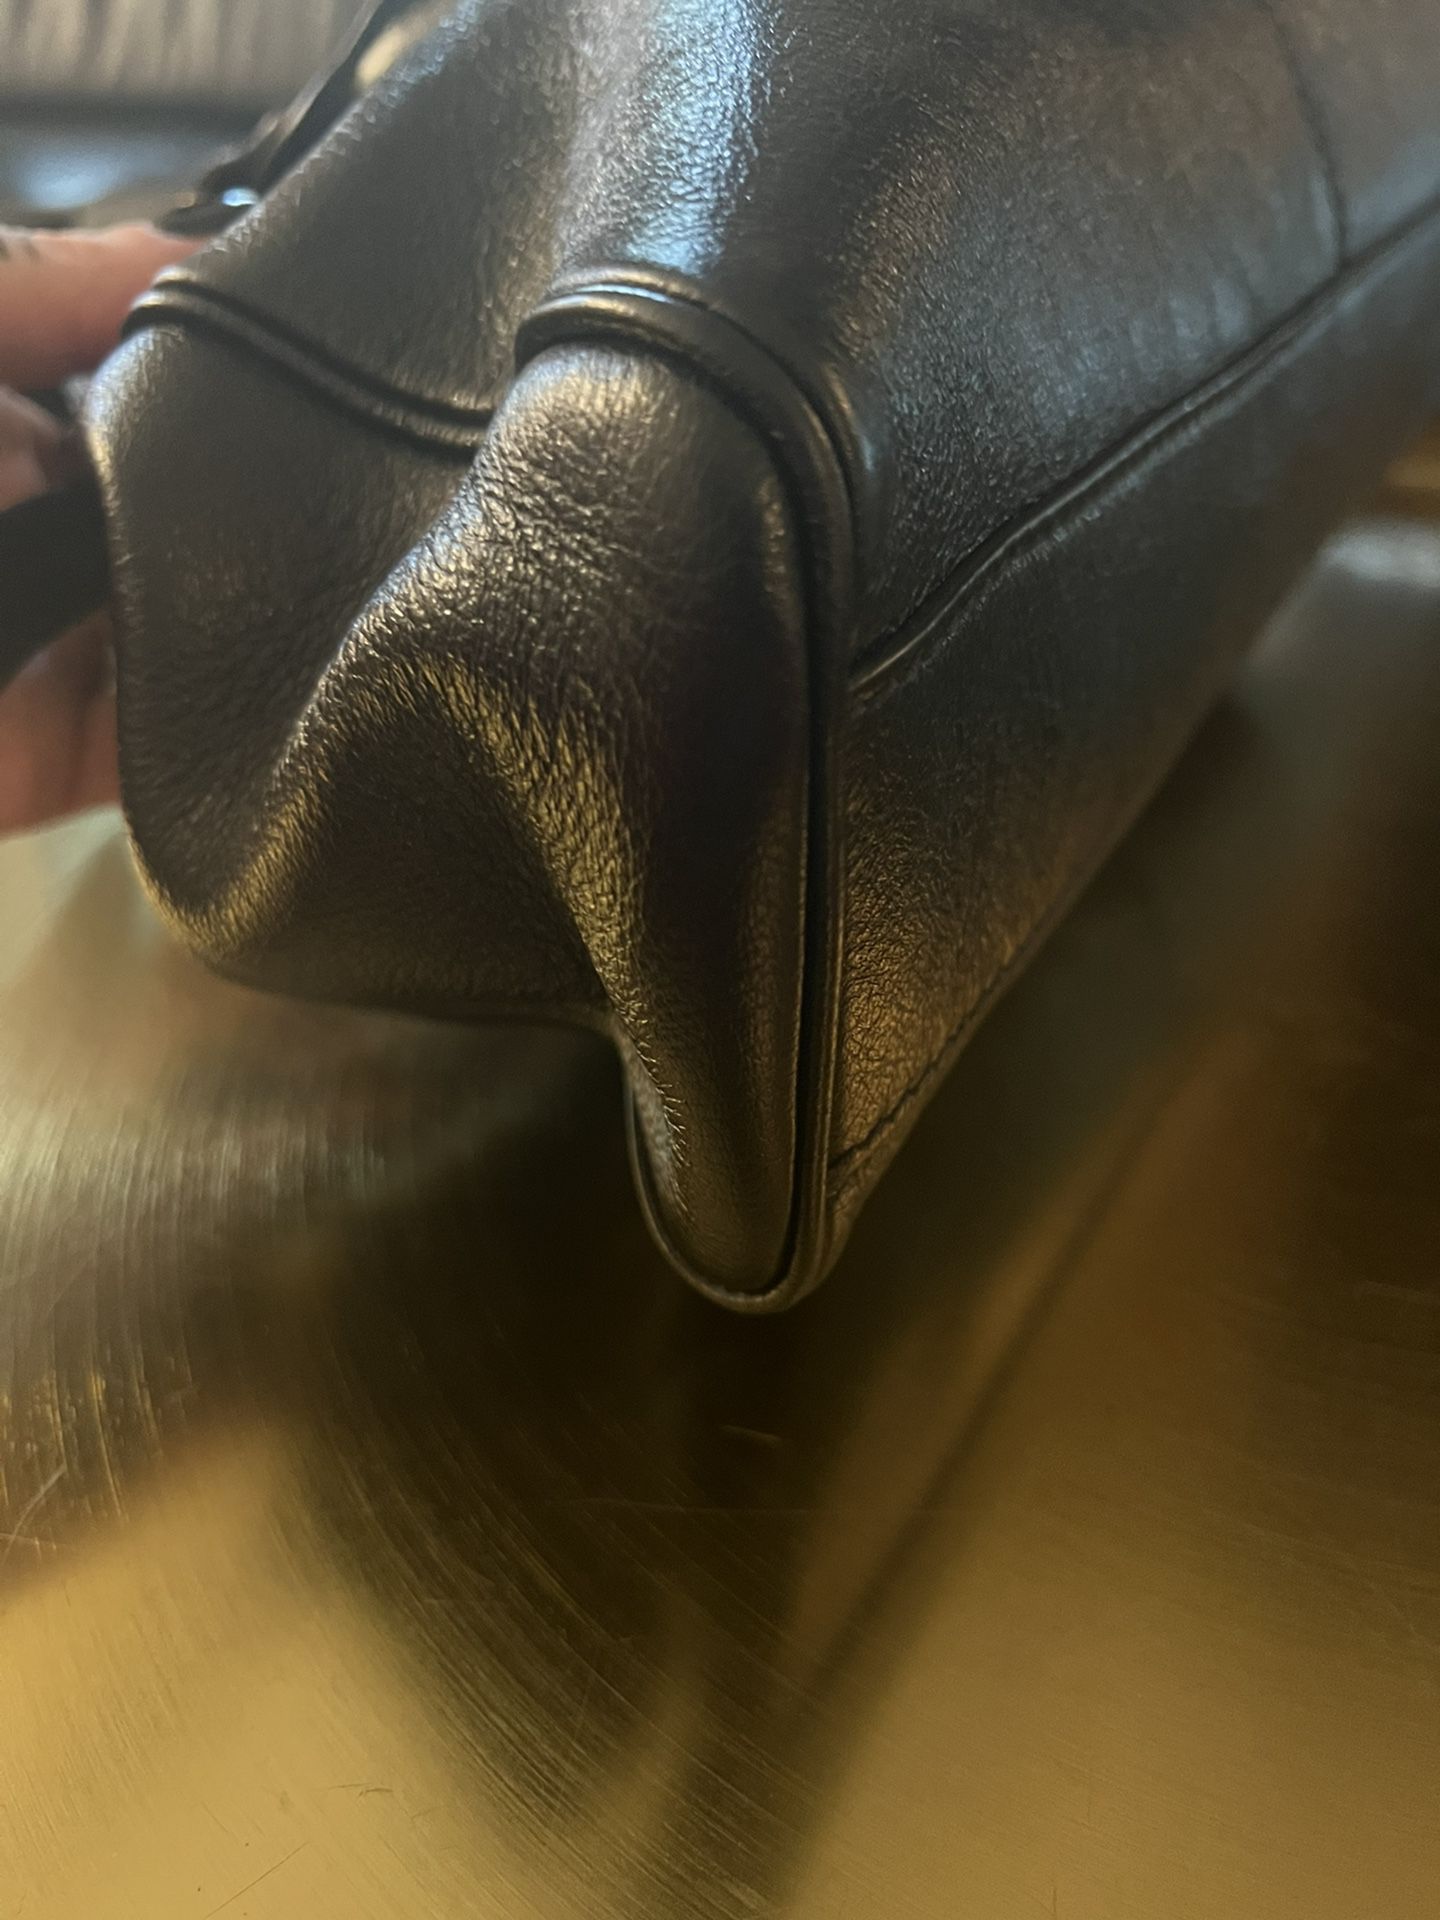 Gucci Controllato Black Leather Clutch Purse for Sale in Arcadia, CA -  OfferUp